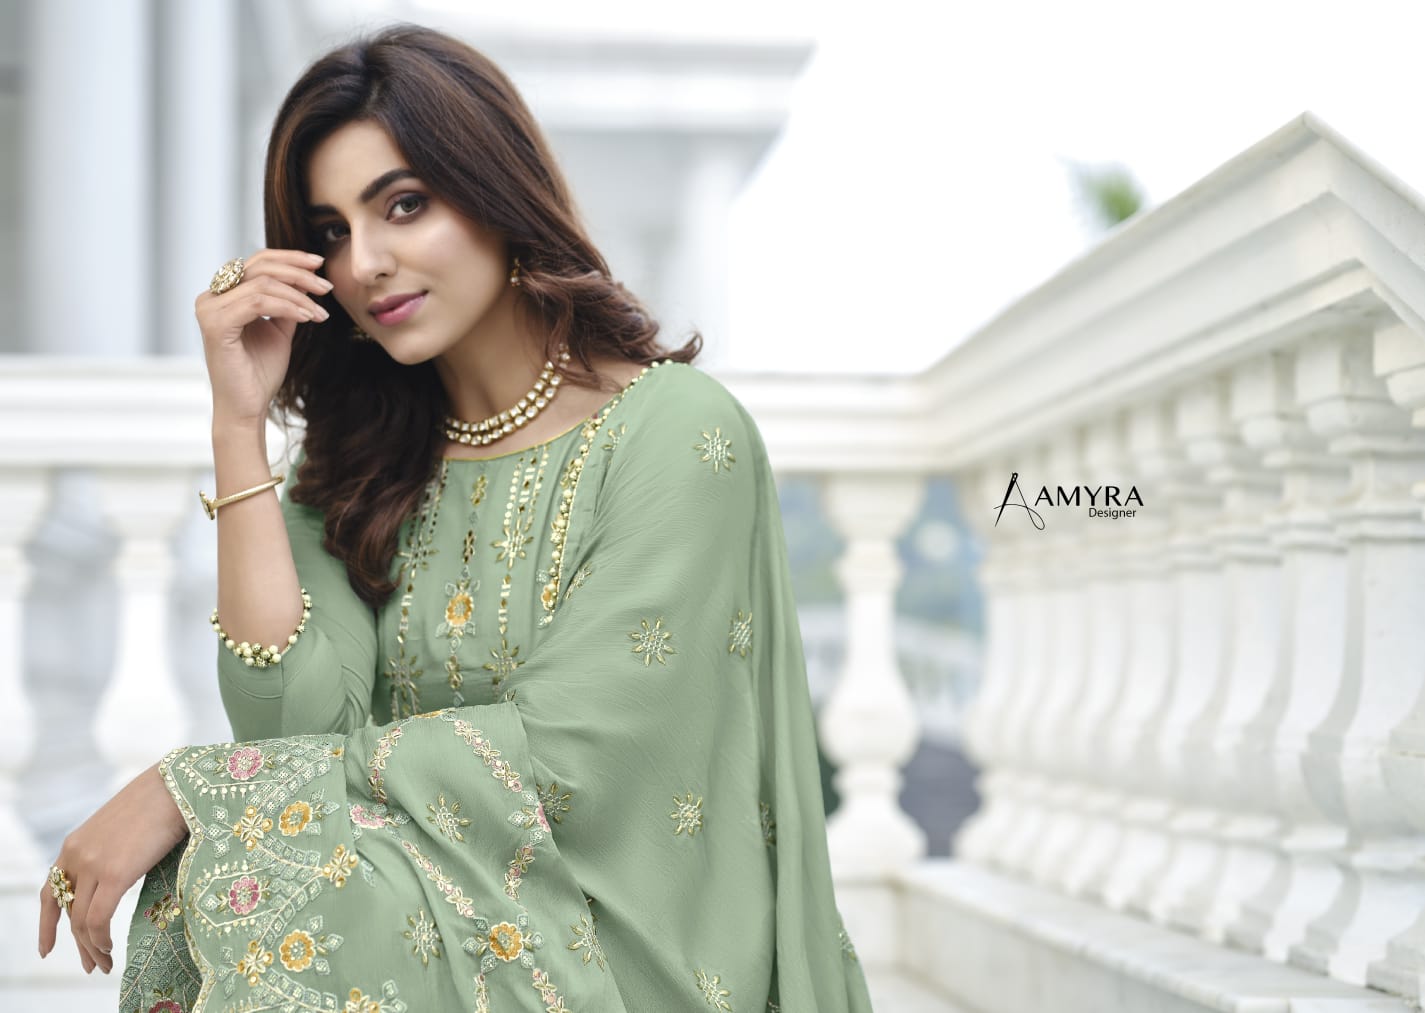 amyra  designer aaina vol 9 chinon graceful look salwar suit catalog